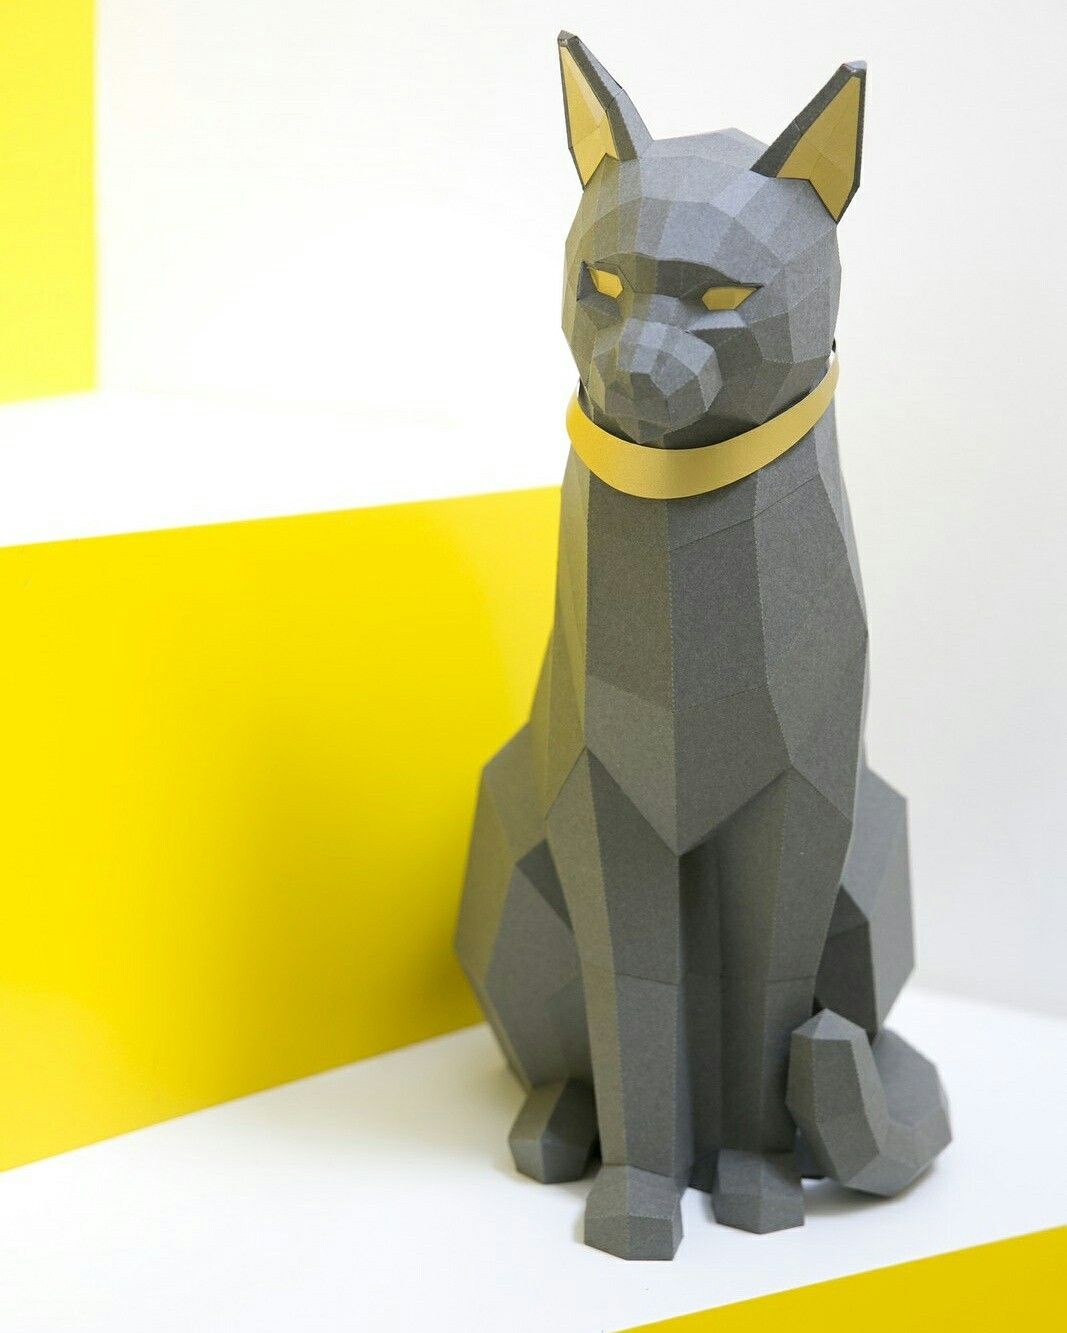 Papercraft Cats Black Cat Papercraft Kit Premium Version with Gold Applications